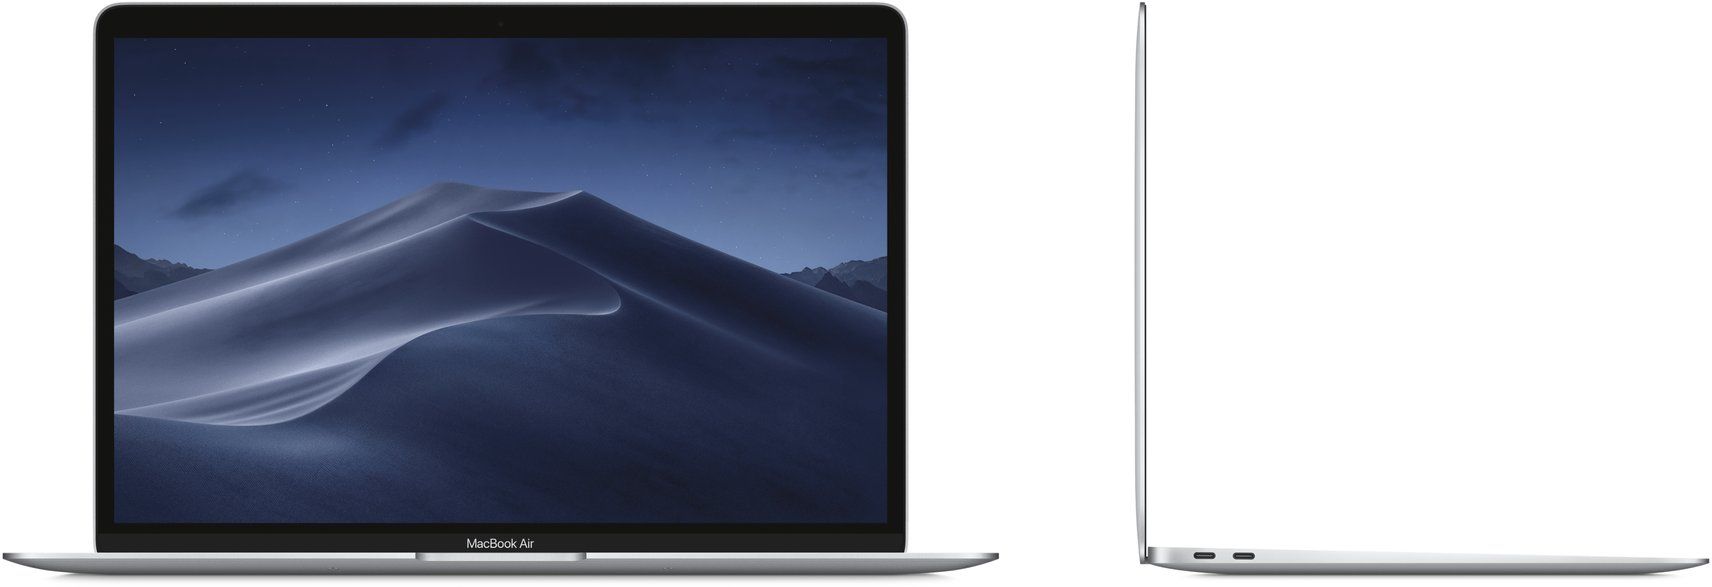 Nouveau MacBook Air Retina